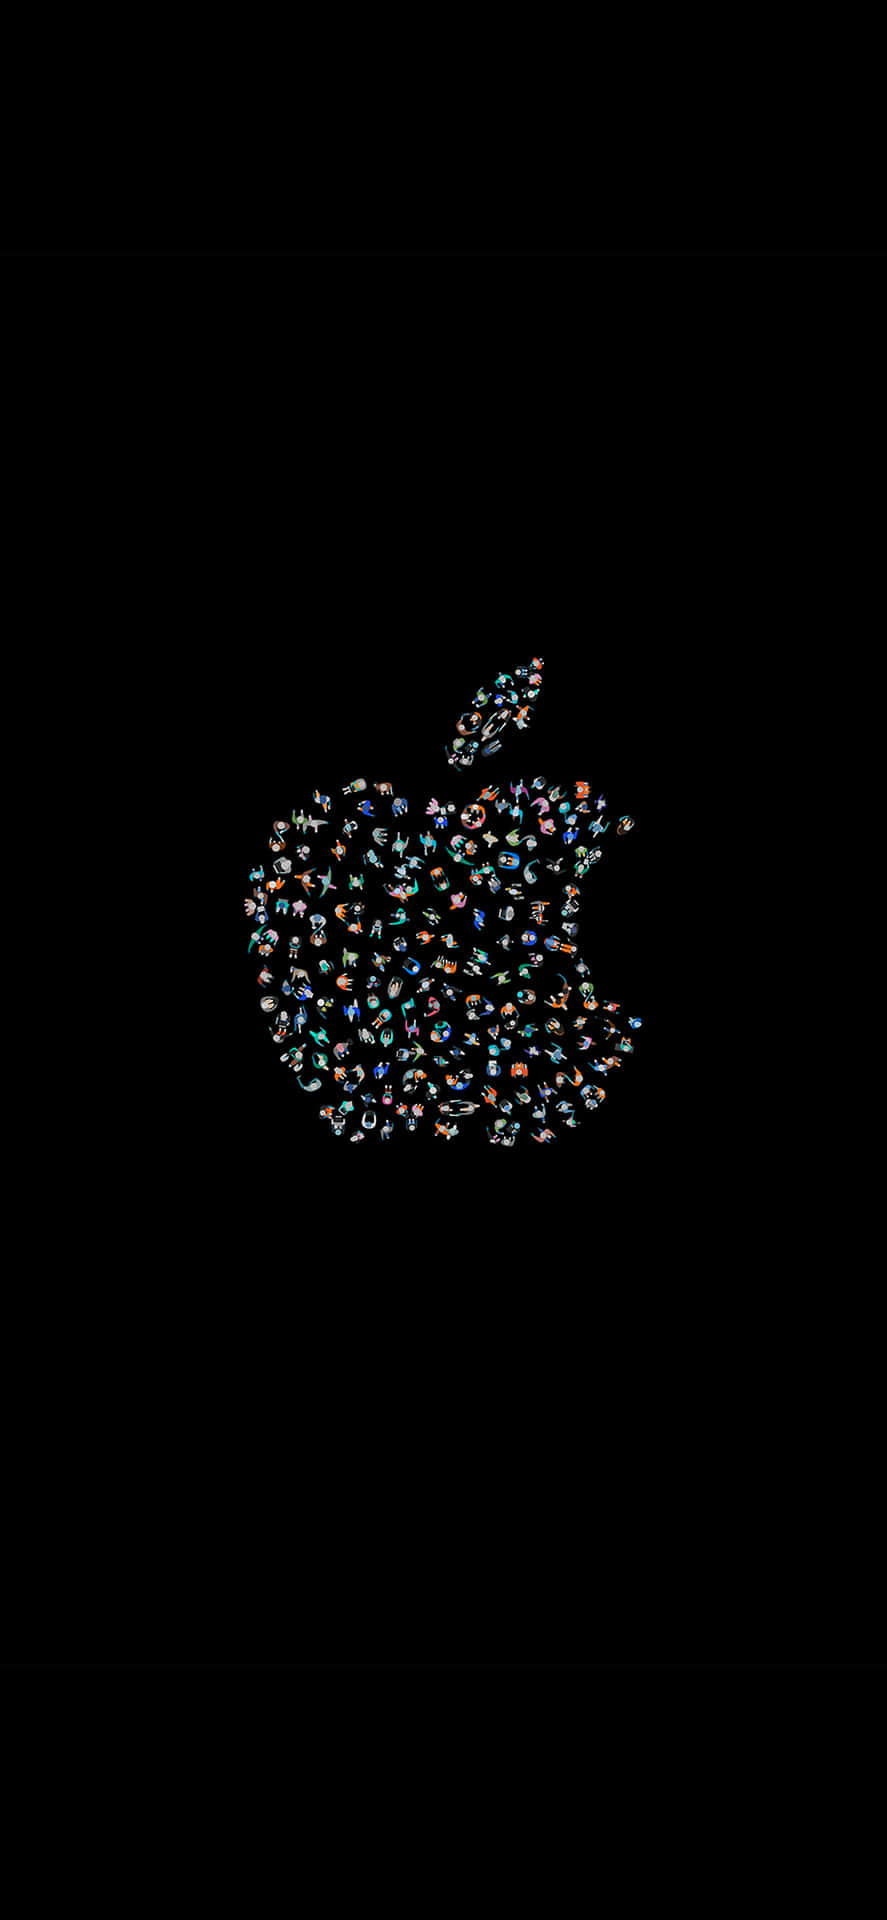 Inventive Logo Amazing Apple HD iPhone Wallpaper